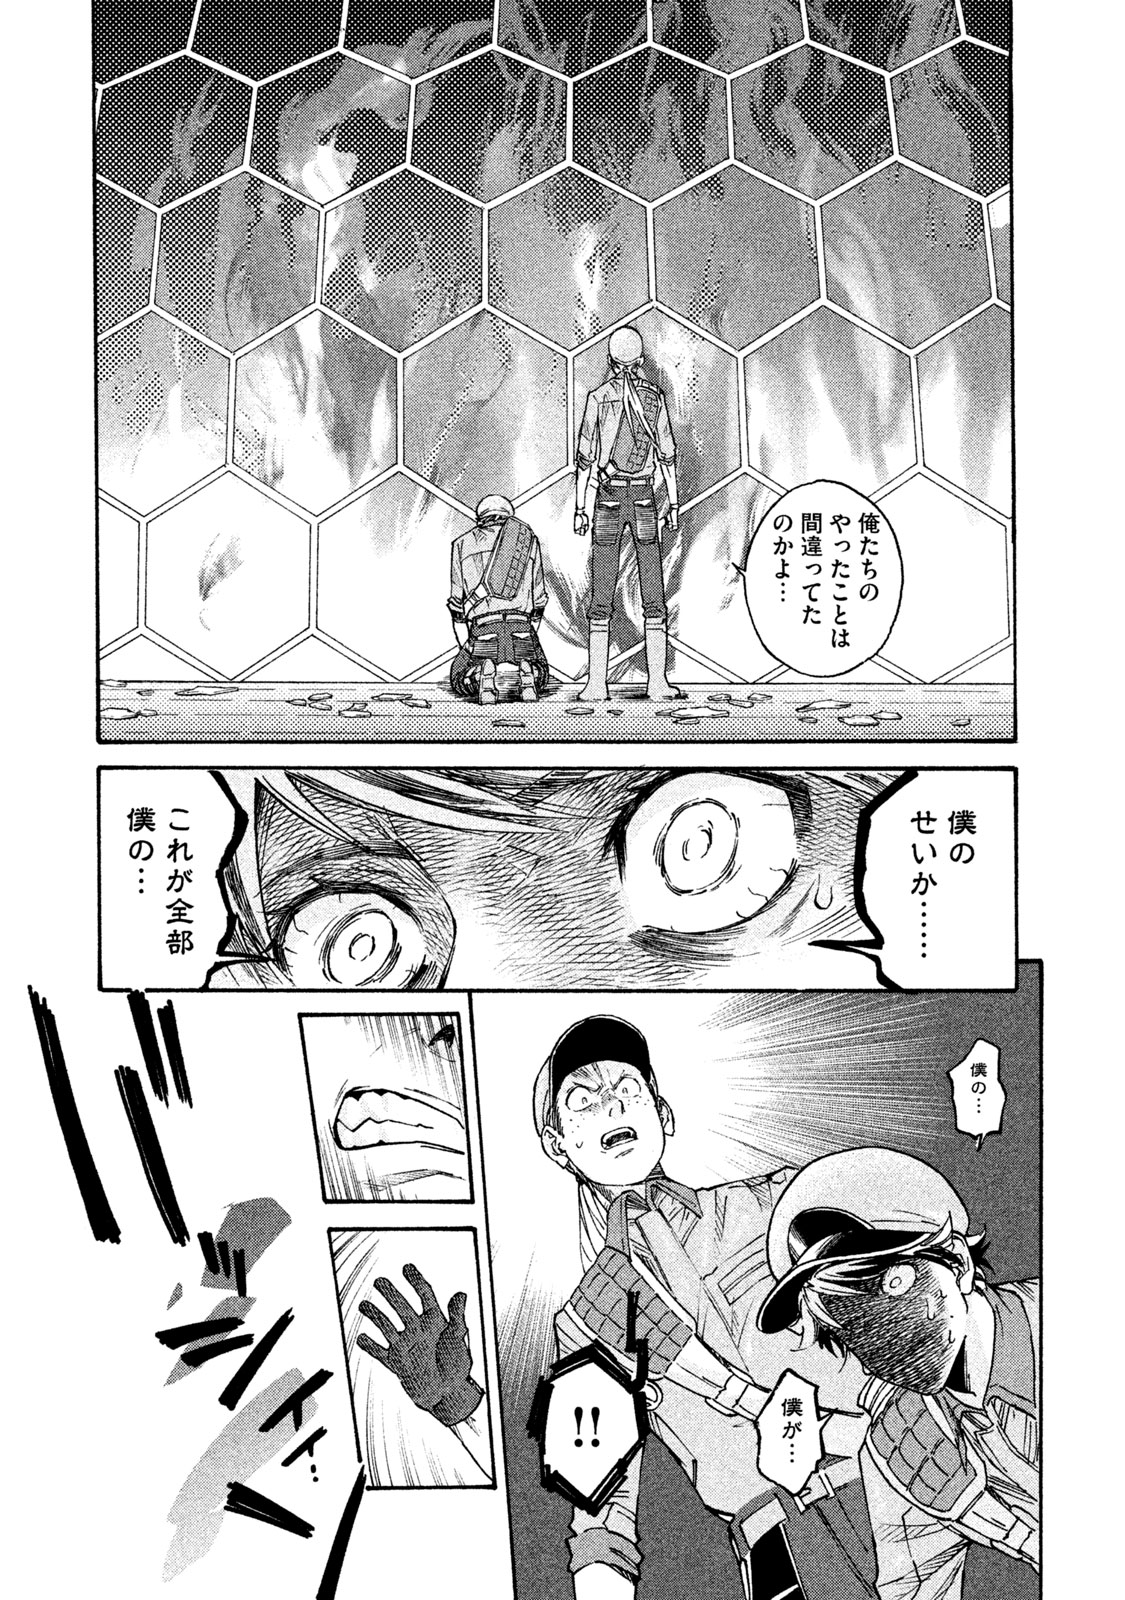 Hataraku Saibou BLACK - Chapter 26 - Page 7